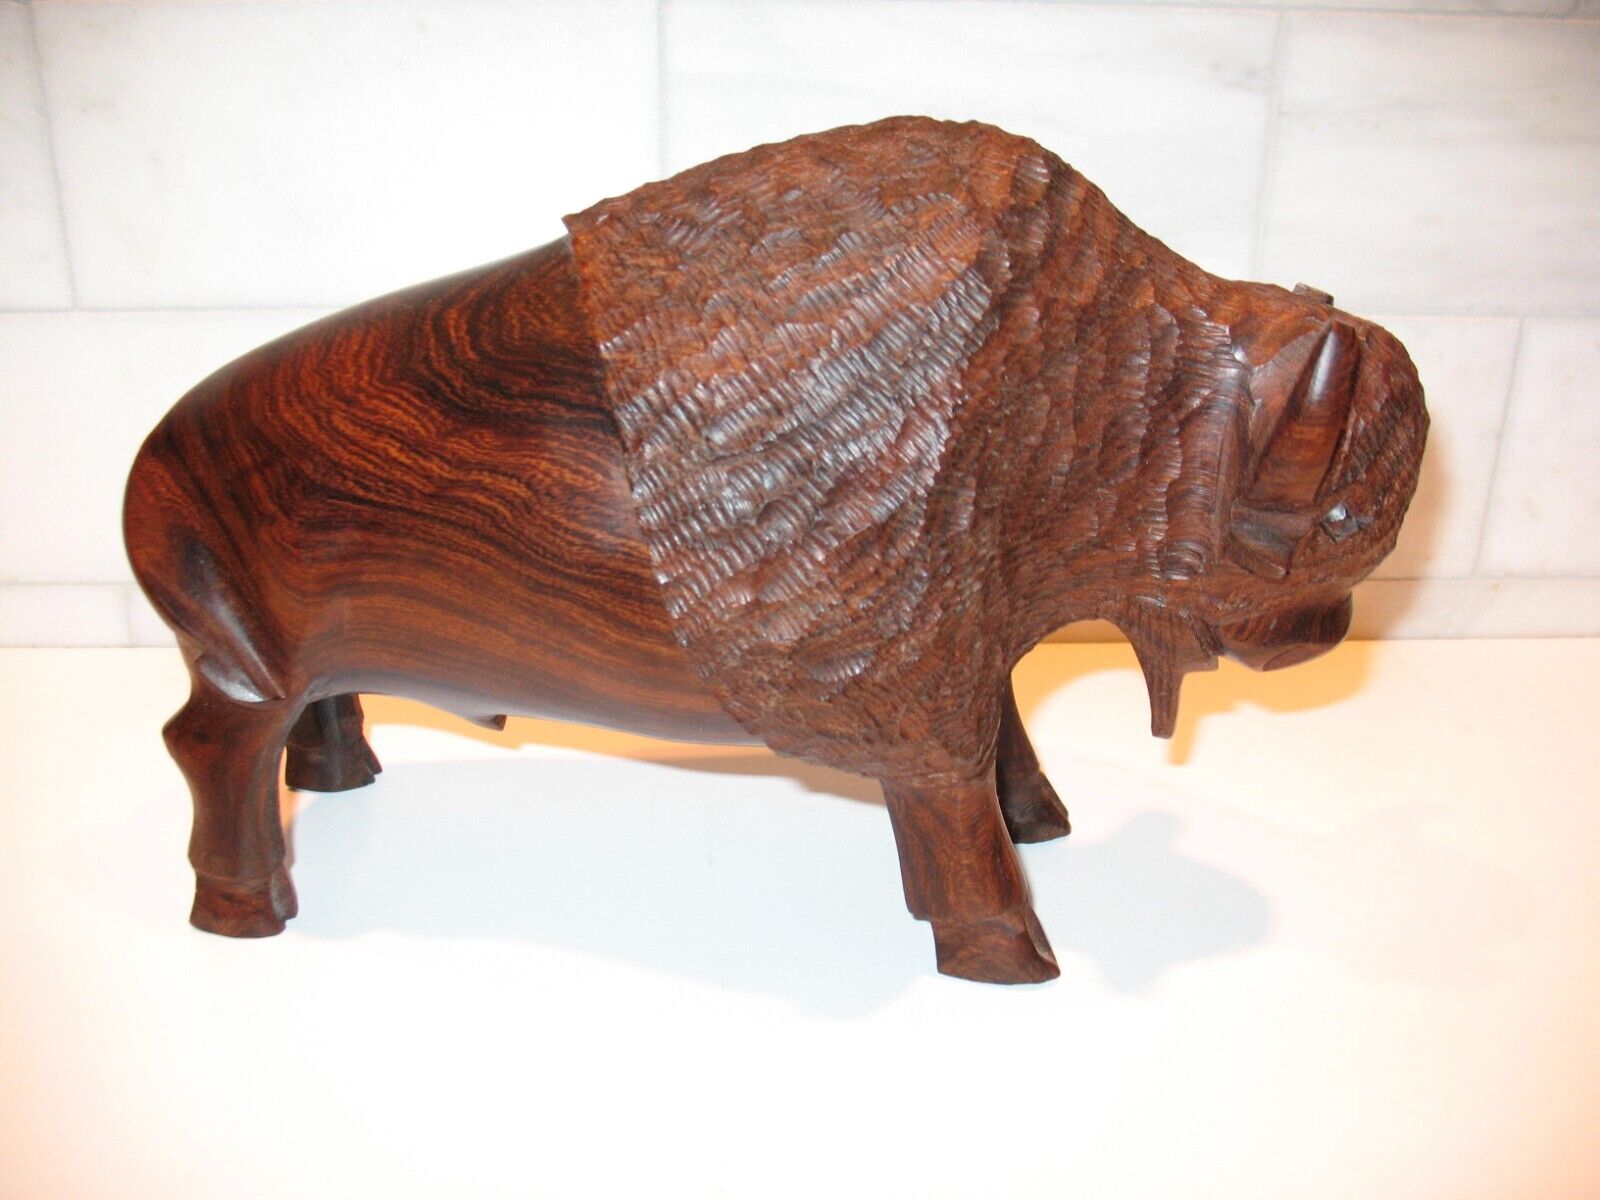 Vintage Buffalo, Iron Wood, Large Hand Carved Art Sculpture; Pristine